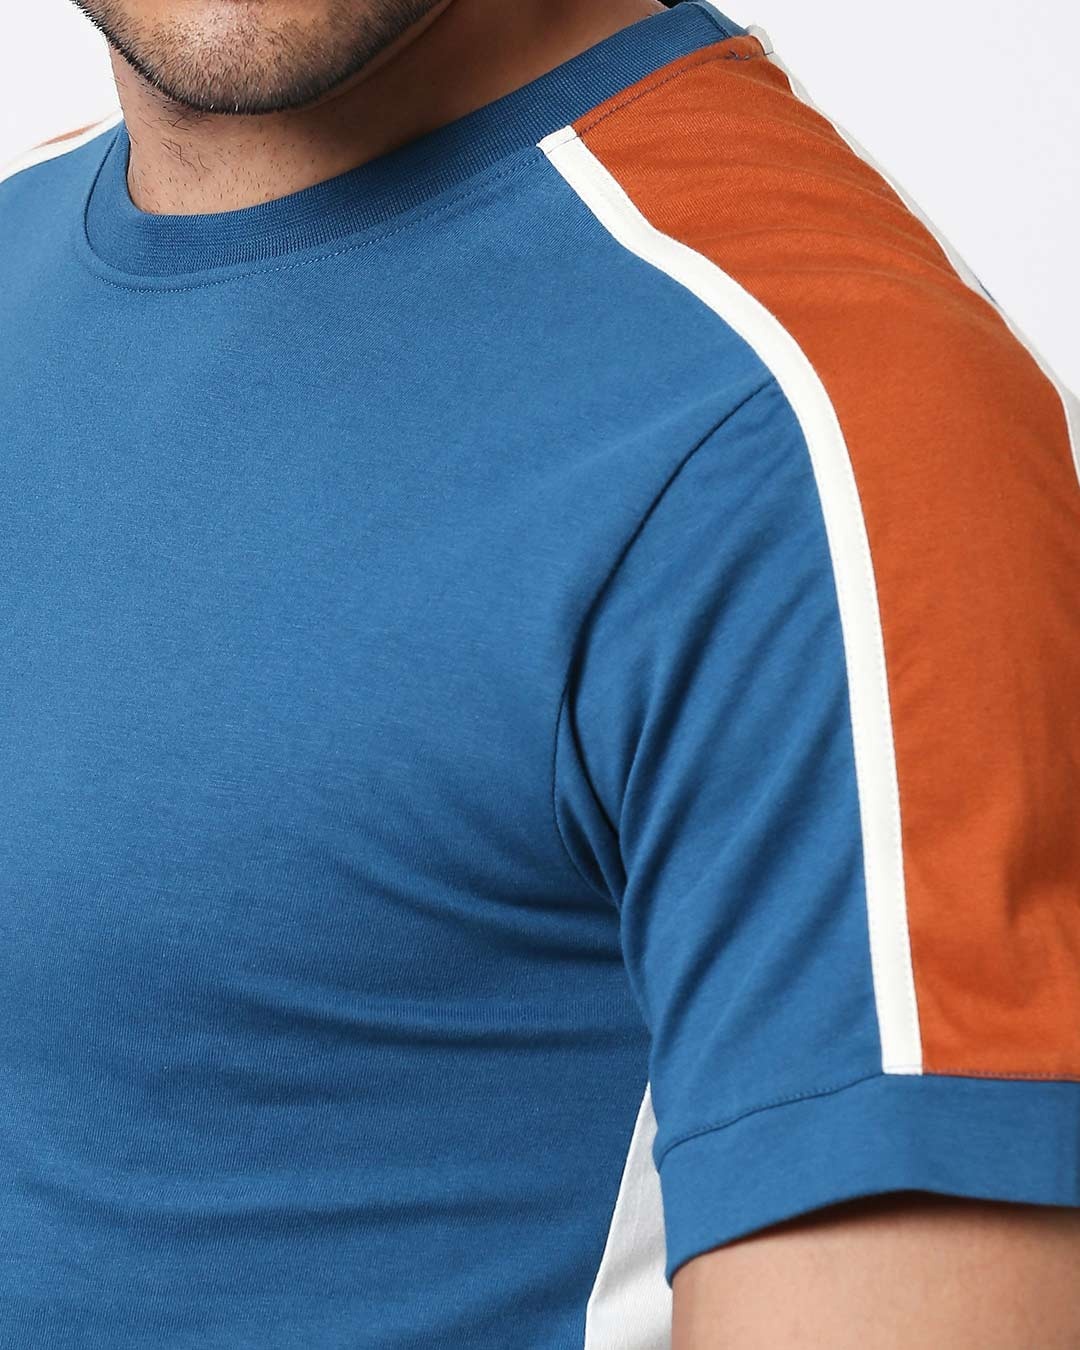 Shop Digi Teal Colorblock Half Sleeve T-Shirt